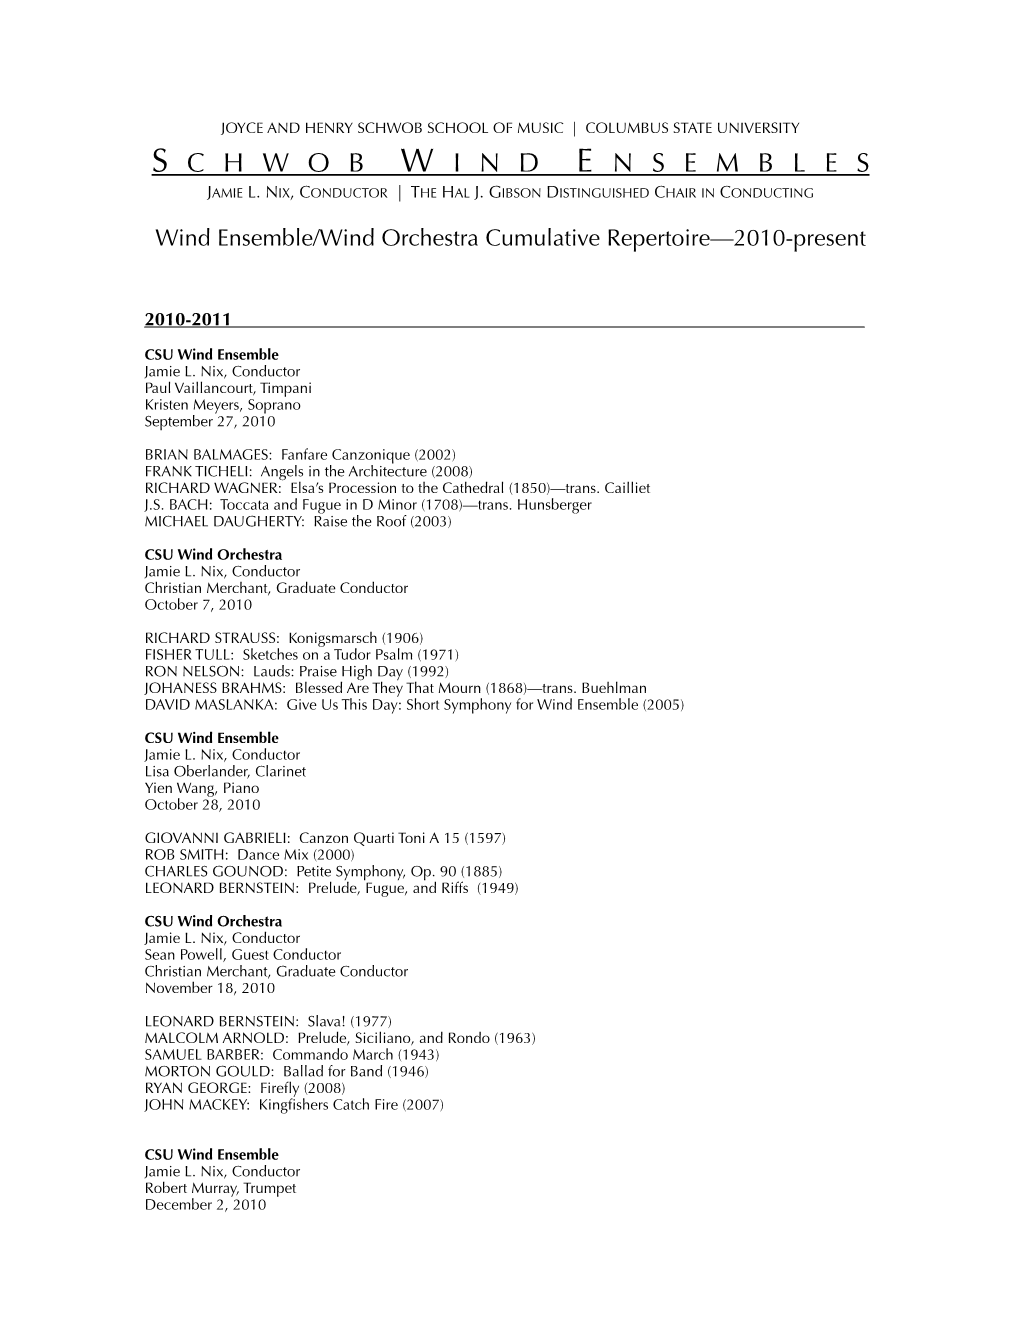 CSU Wind Ensemble Activities Repertoire 2010-Present